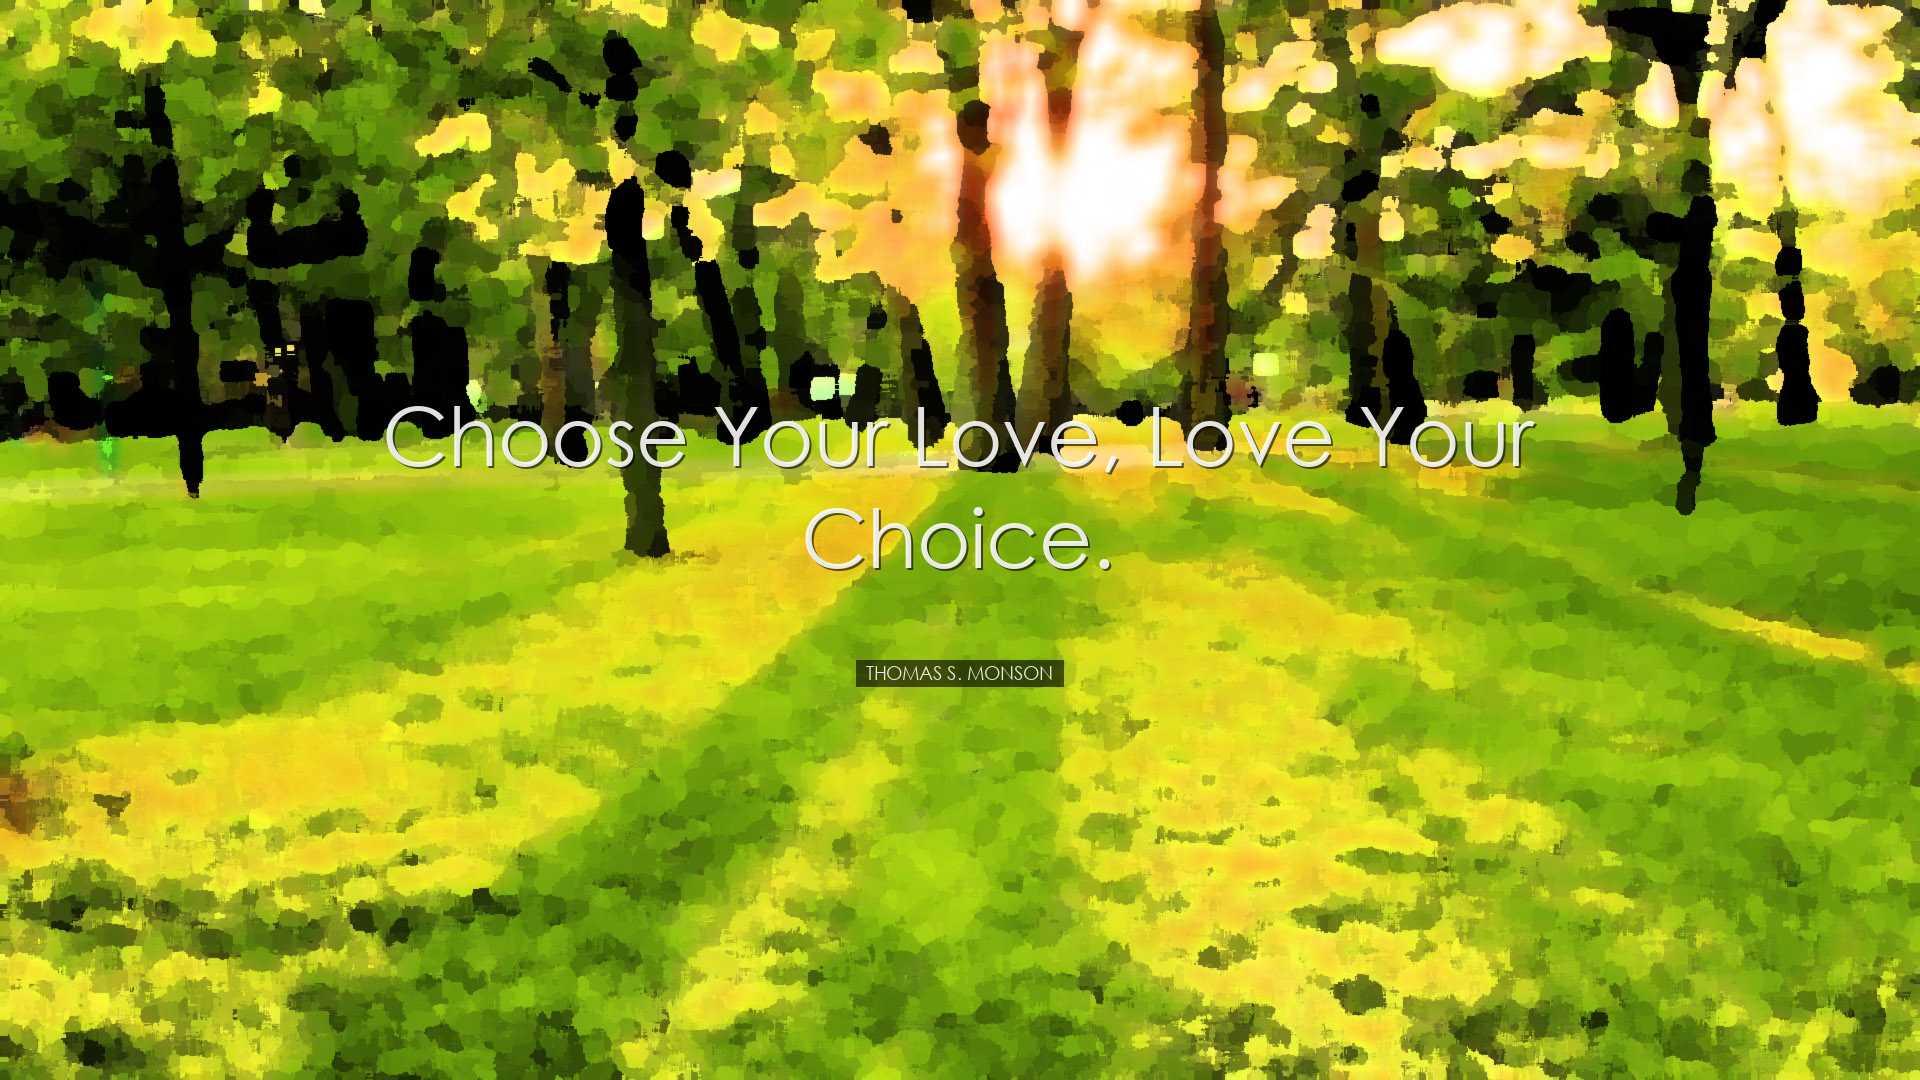 Choose your love, Love your choice. - Thomas S. Monson